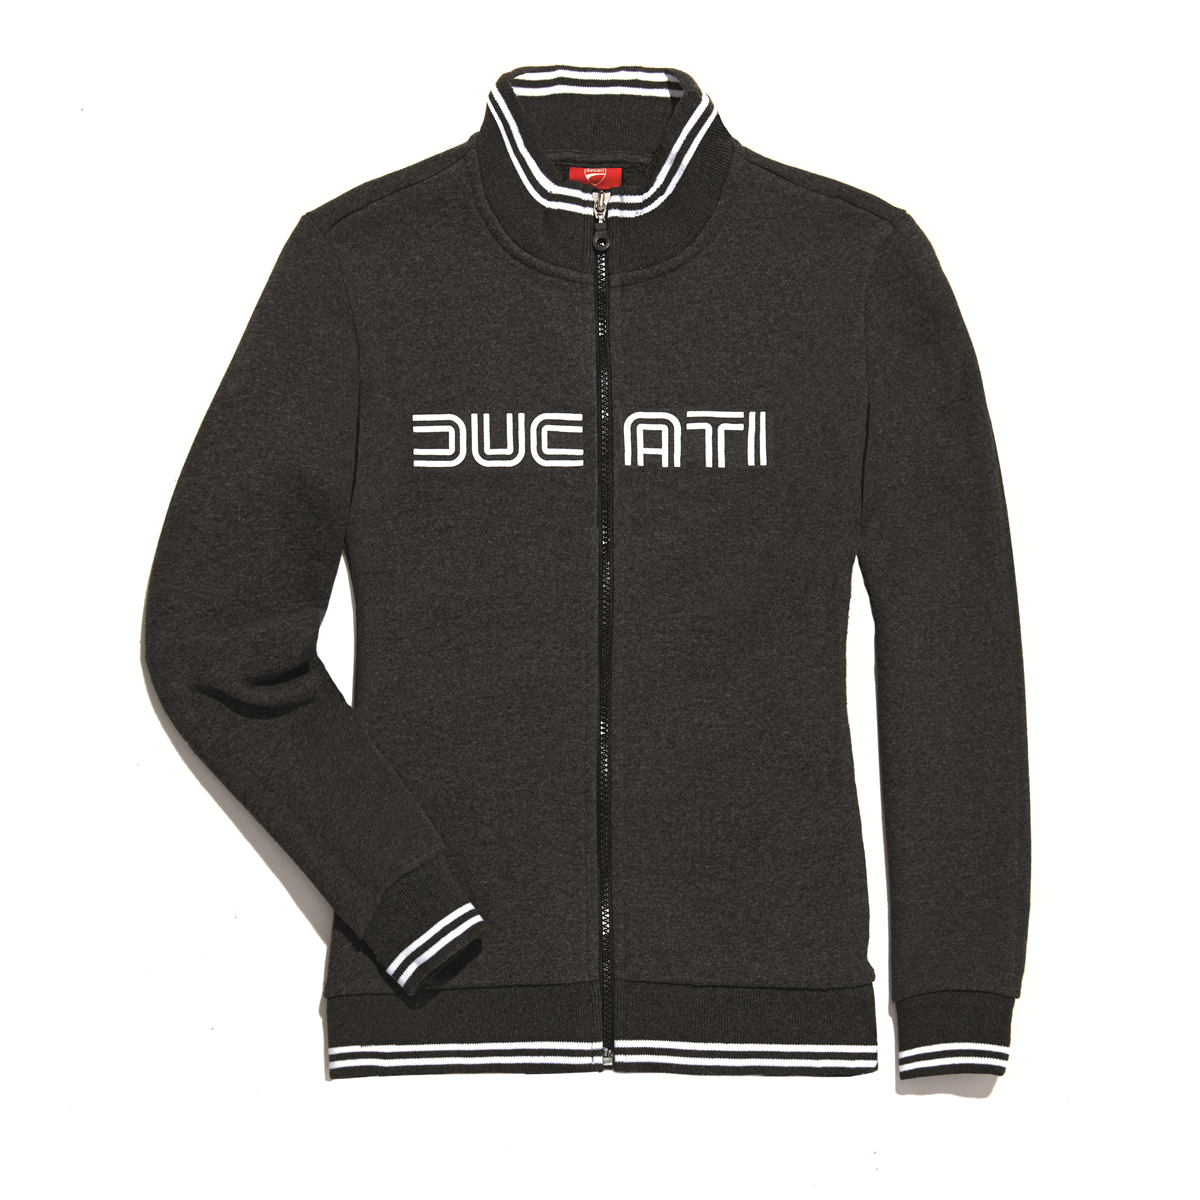 Ducati Giugiaro Women's Sweatshirt